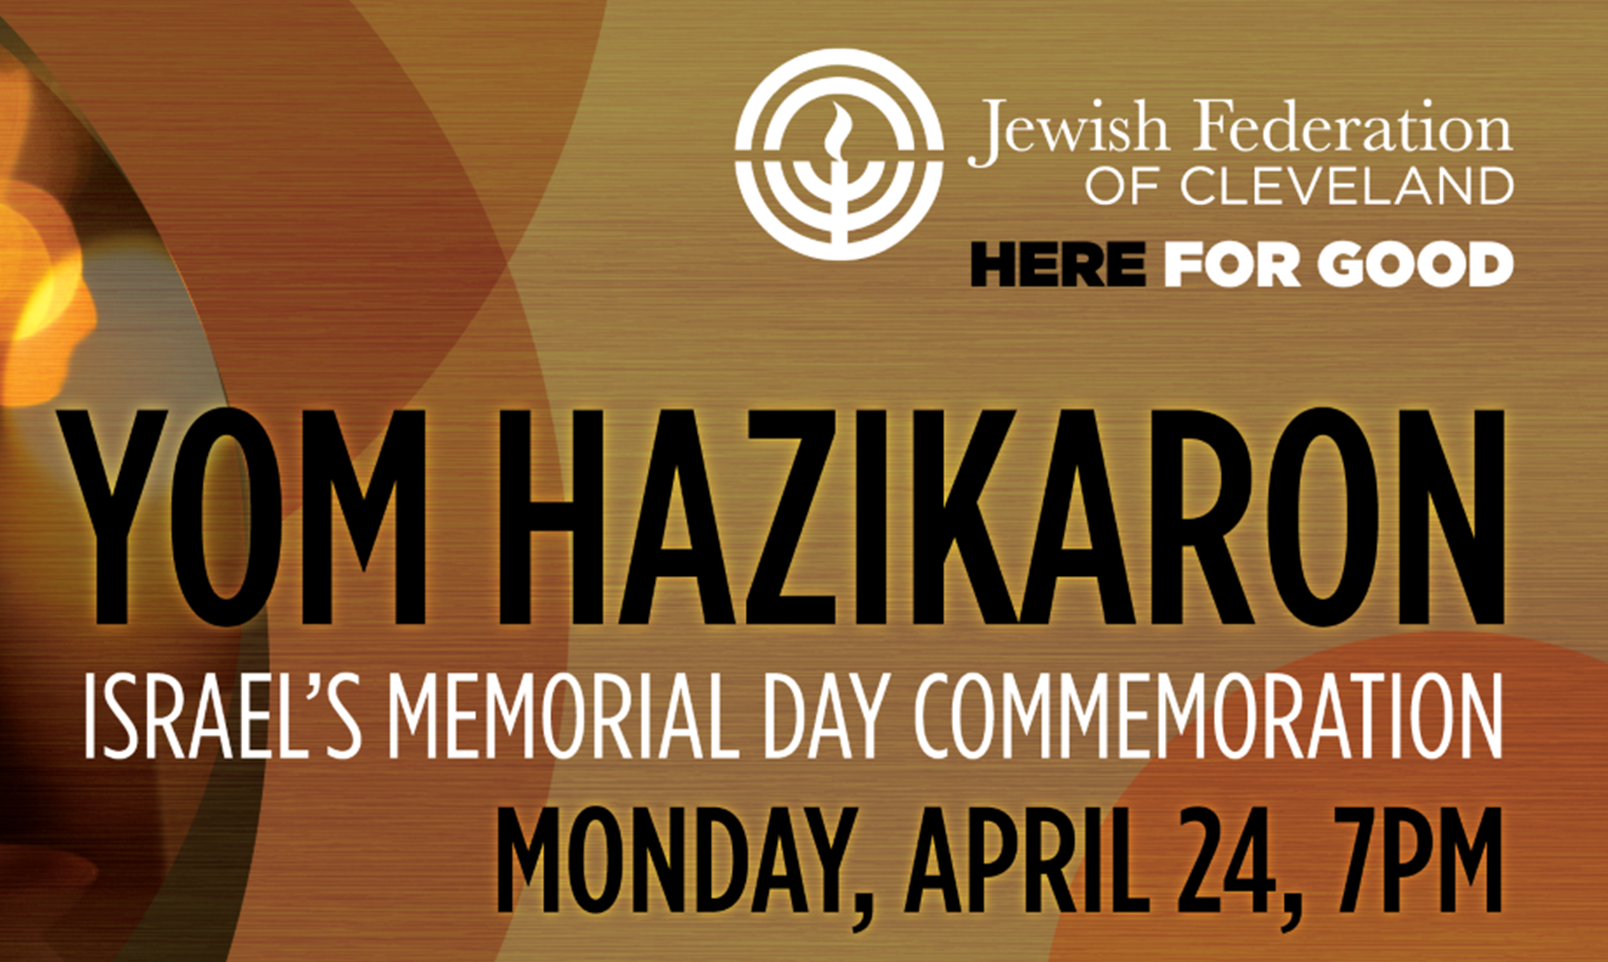 Yom Hazikaron - Israel's Memorial Day Commemoration